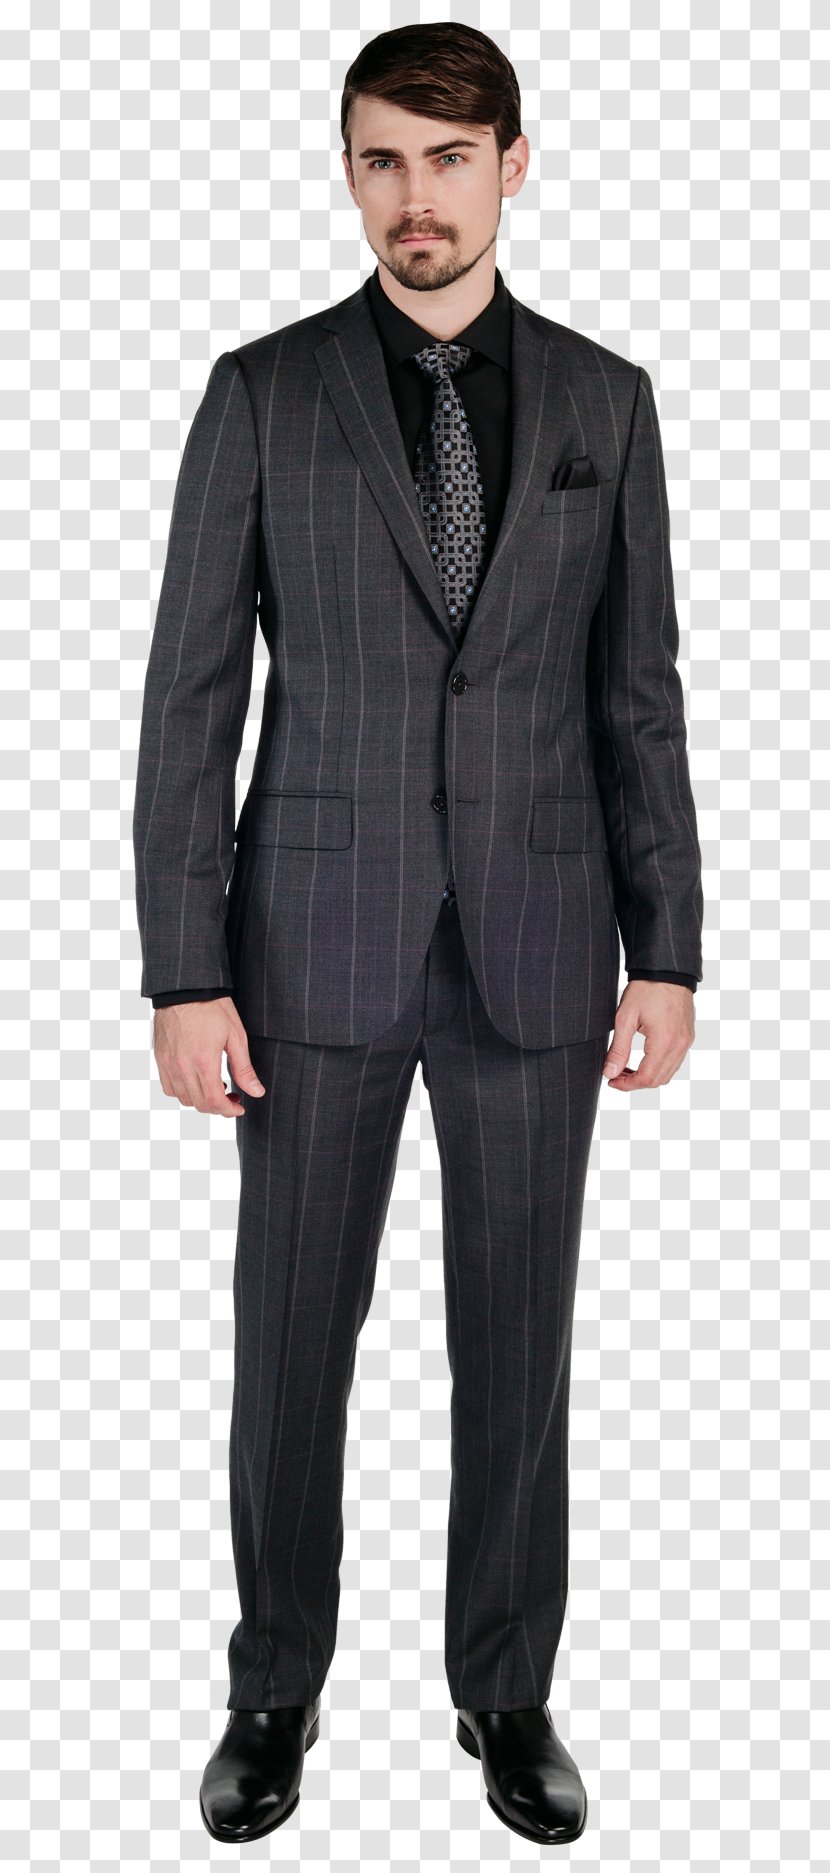 Suit Formal Wear Tuxedo Clothing Blazer - Whitecollar Worker - Dark Transparent PNG